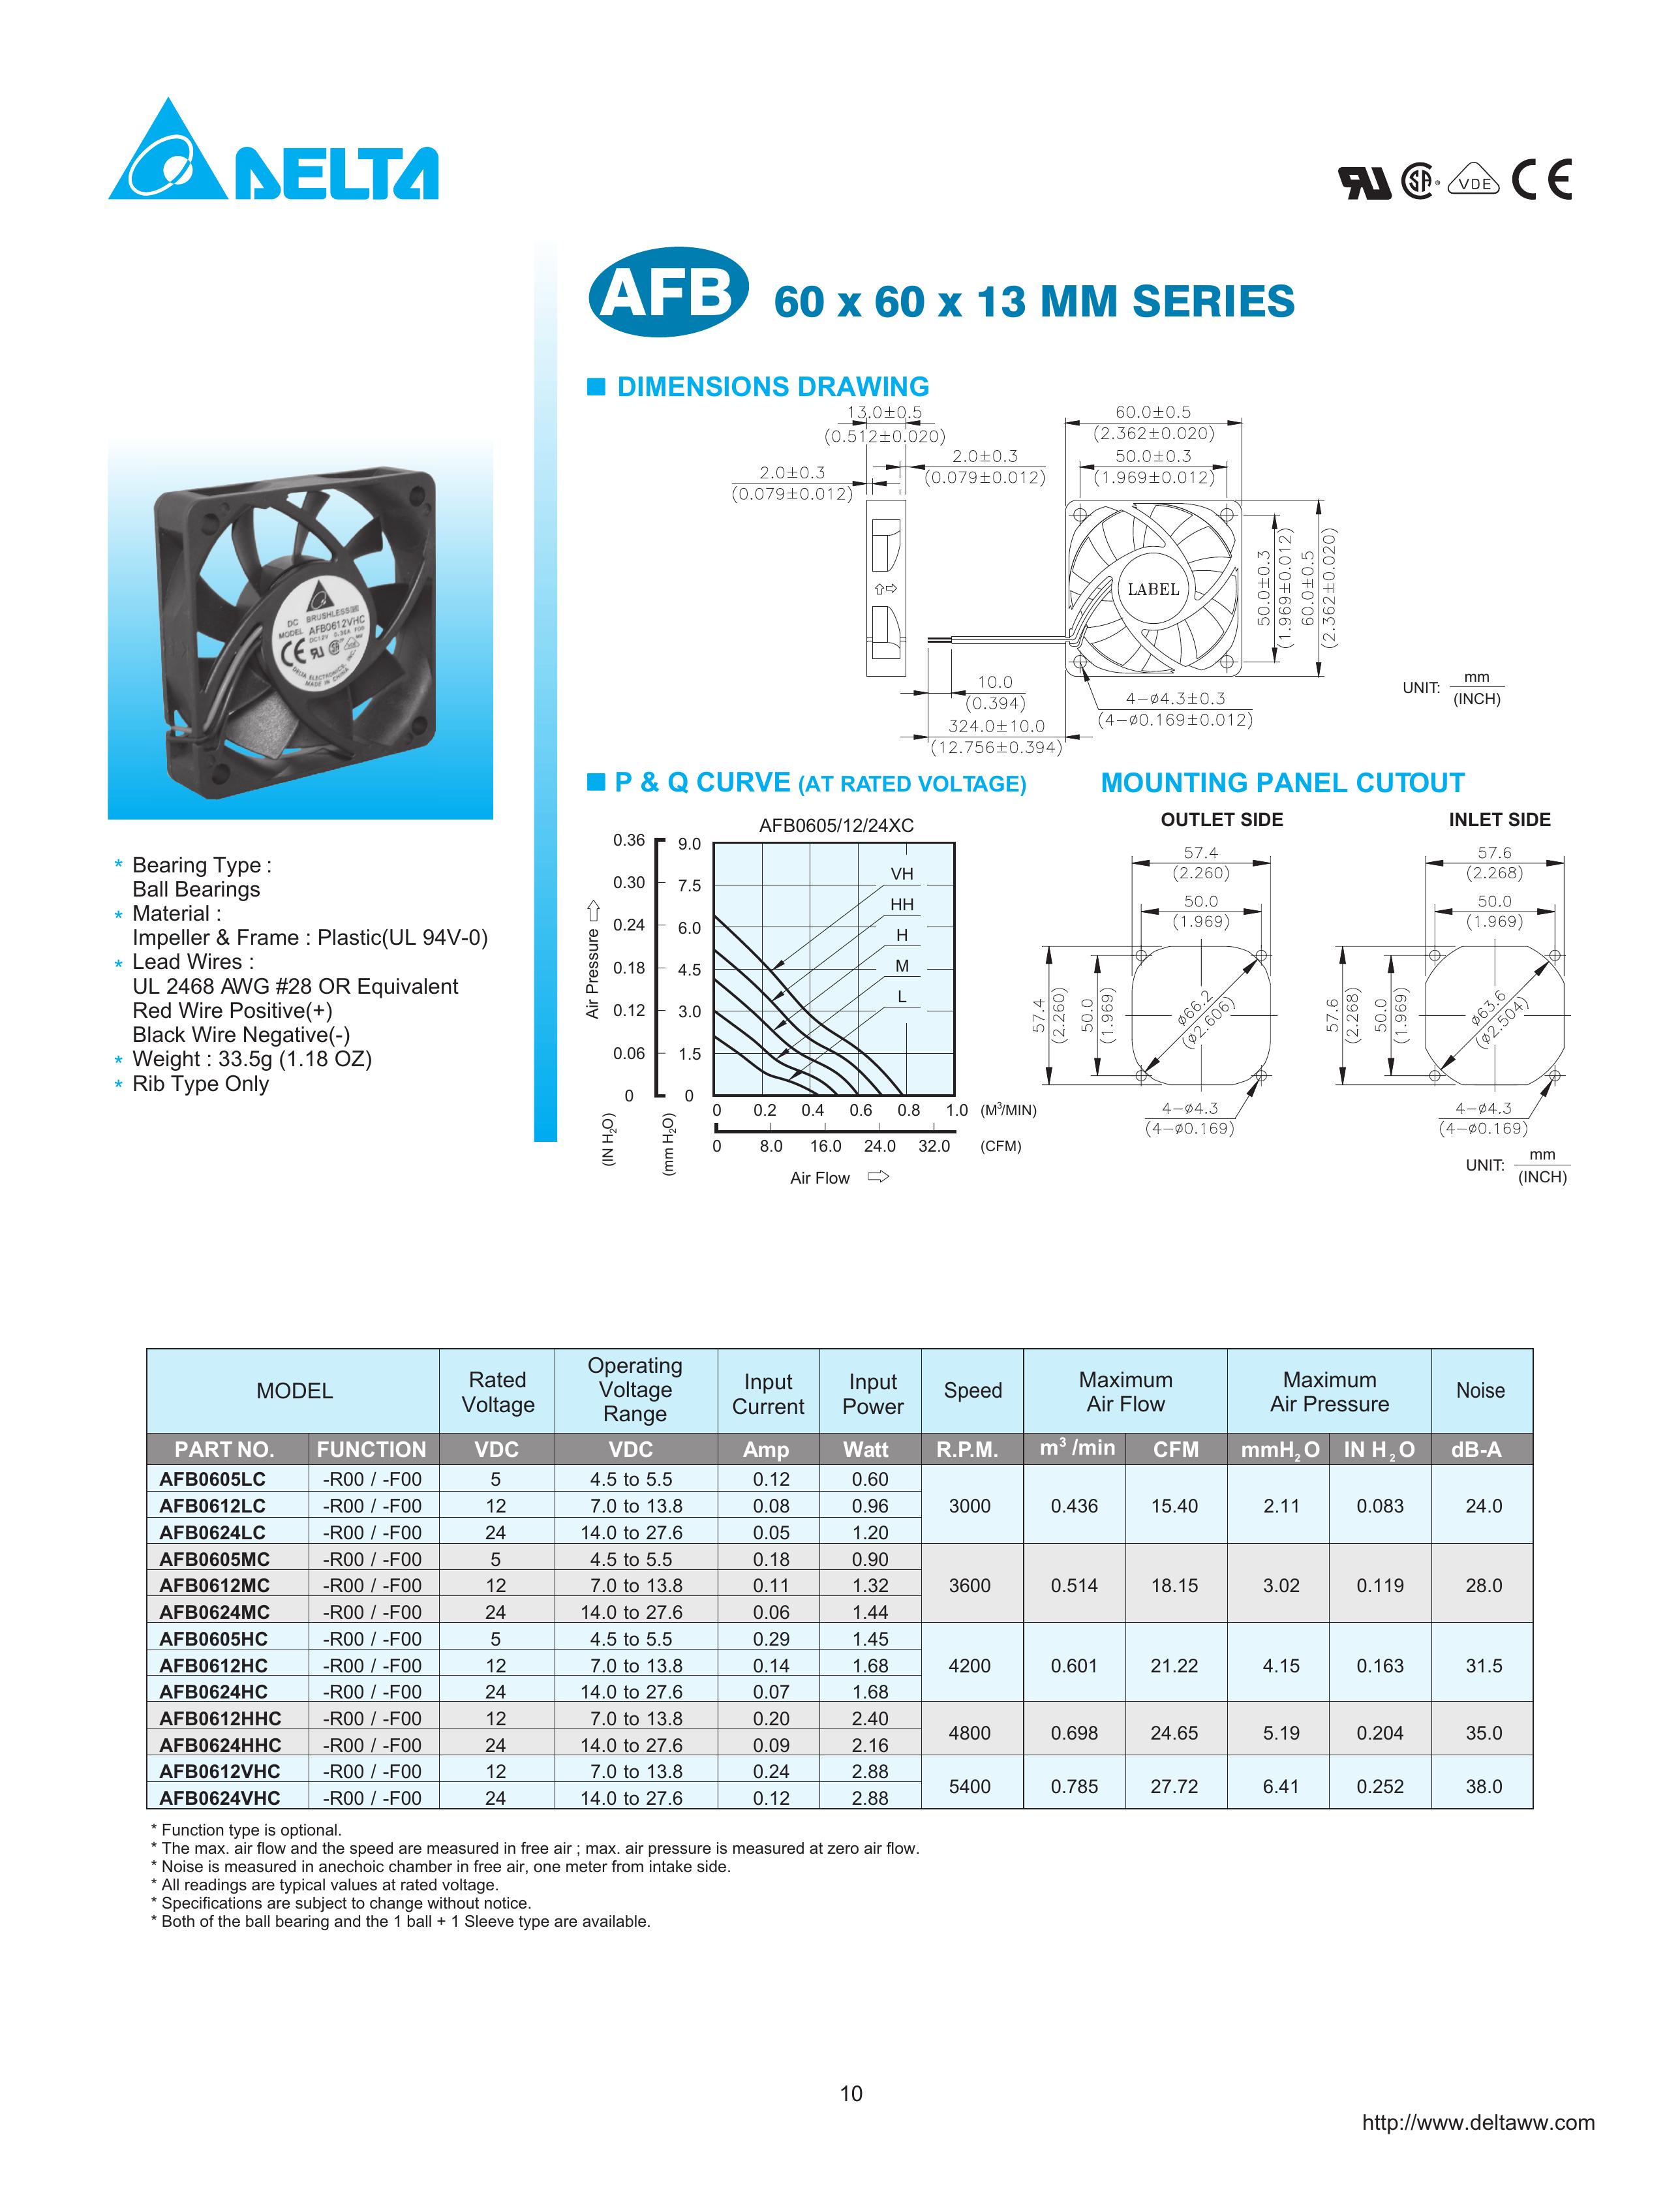 Delta Electronics AFB0612MC Ventilation Hood User Manual